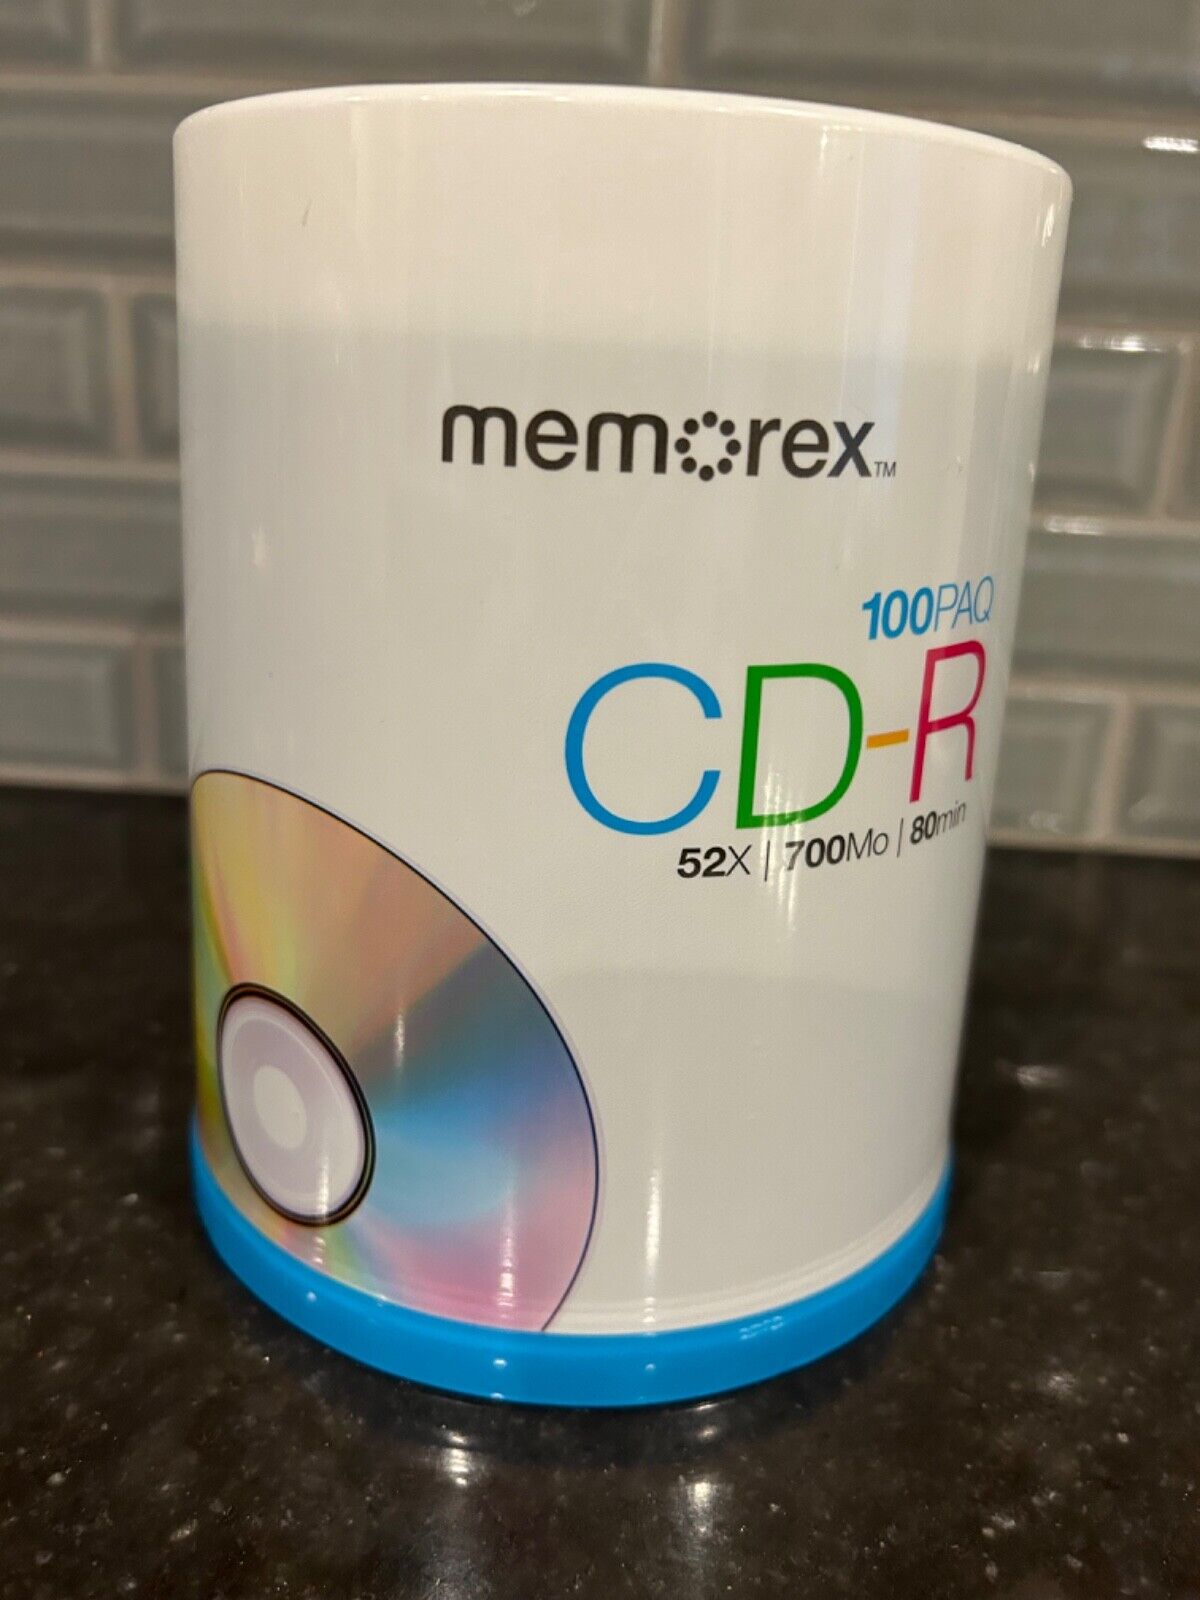 NEW Memorex CD-R Digital Media 52X 700mb 80Min 100 Pack Factory Sealed